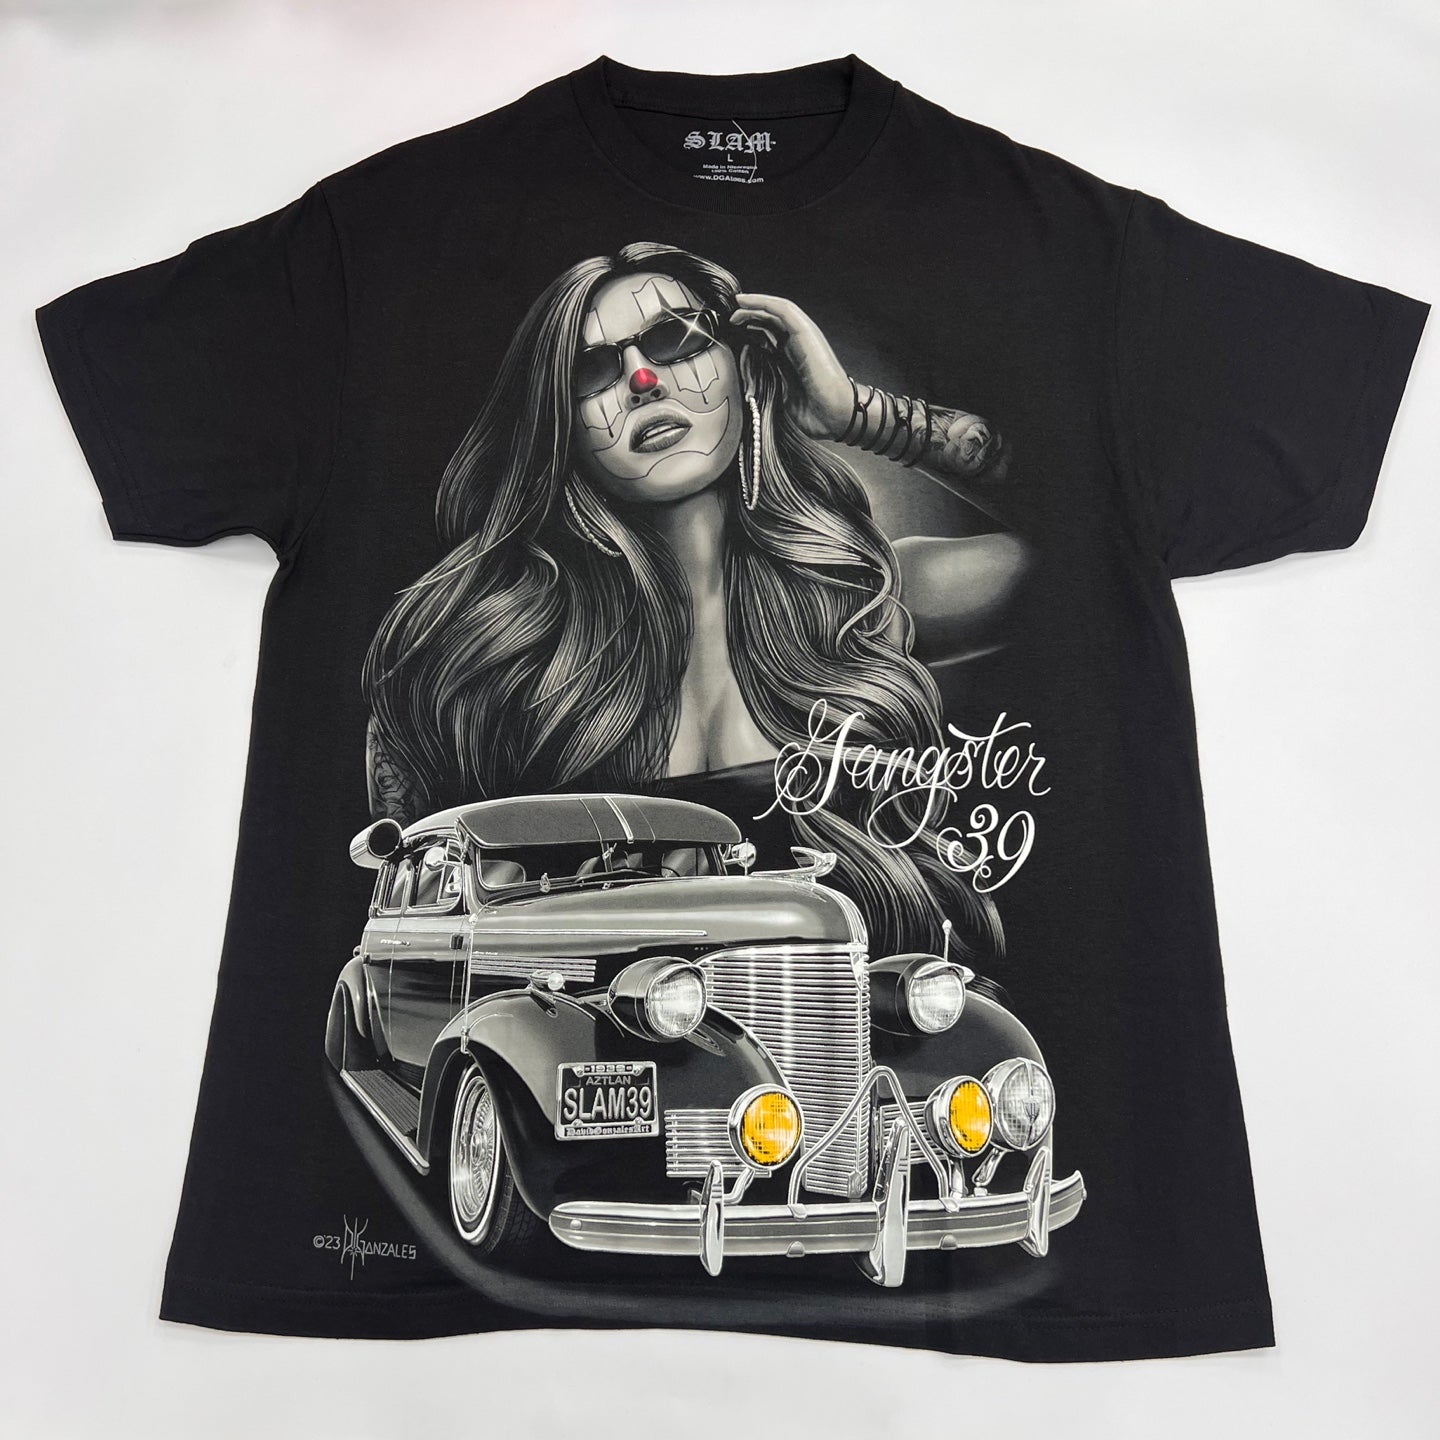 DGA Gangster 39 Graphic T-Shirt